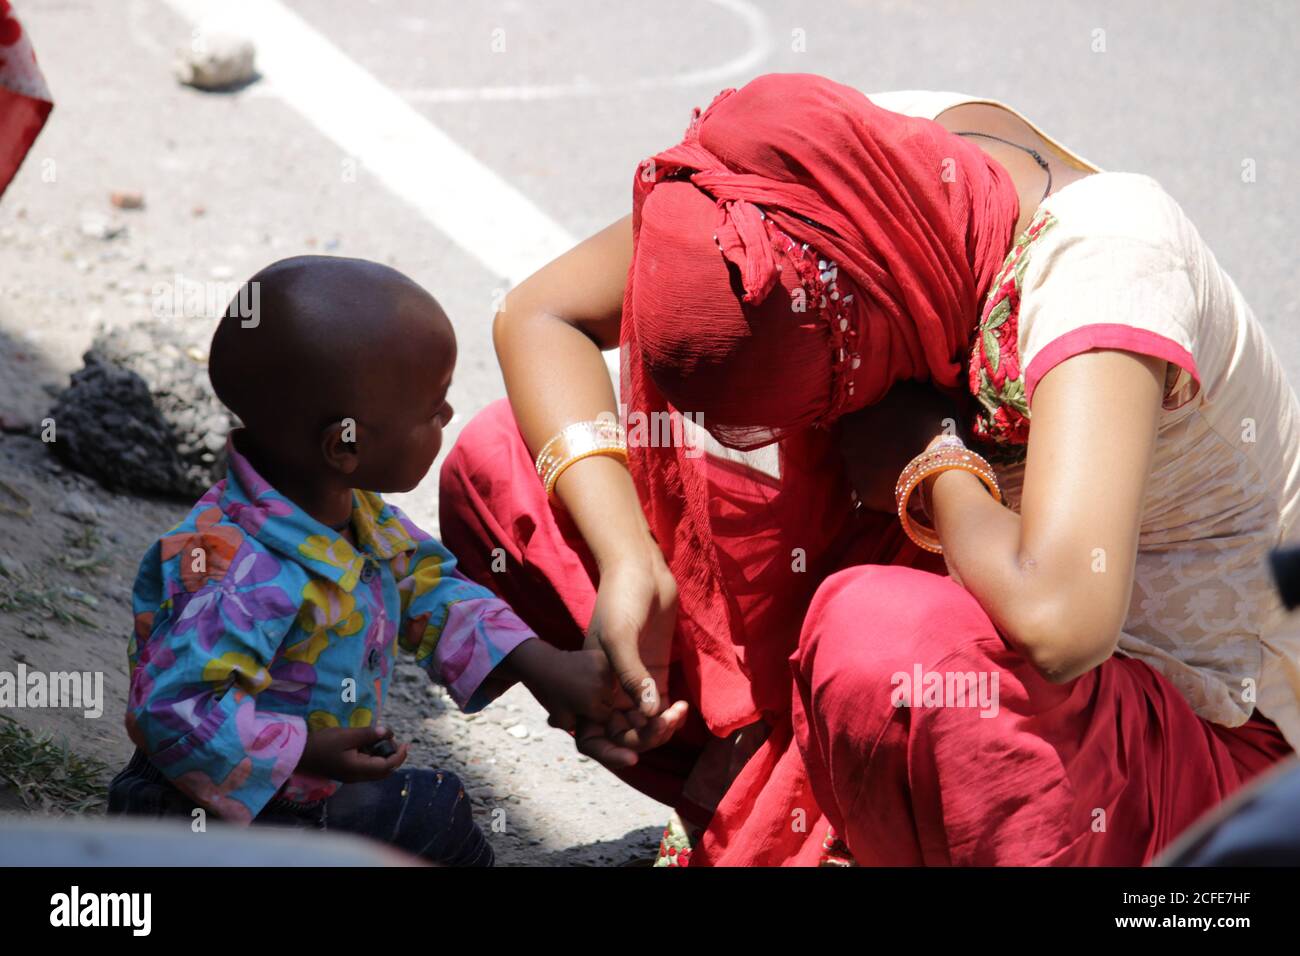 Dehradun, Uttarakhand/India - August 01 2020:Poor Indian women with her child. Stock Photo